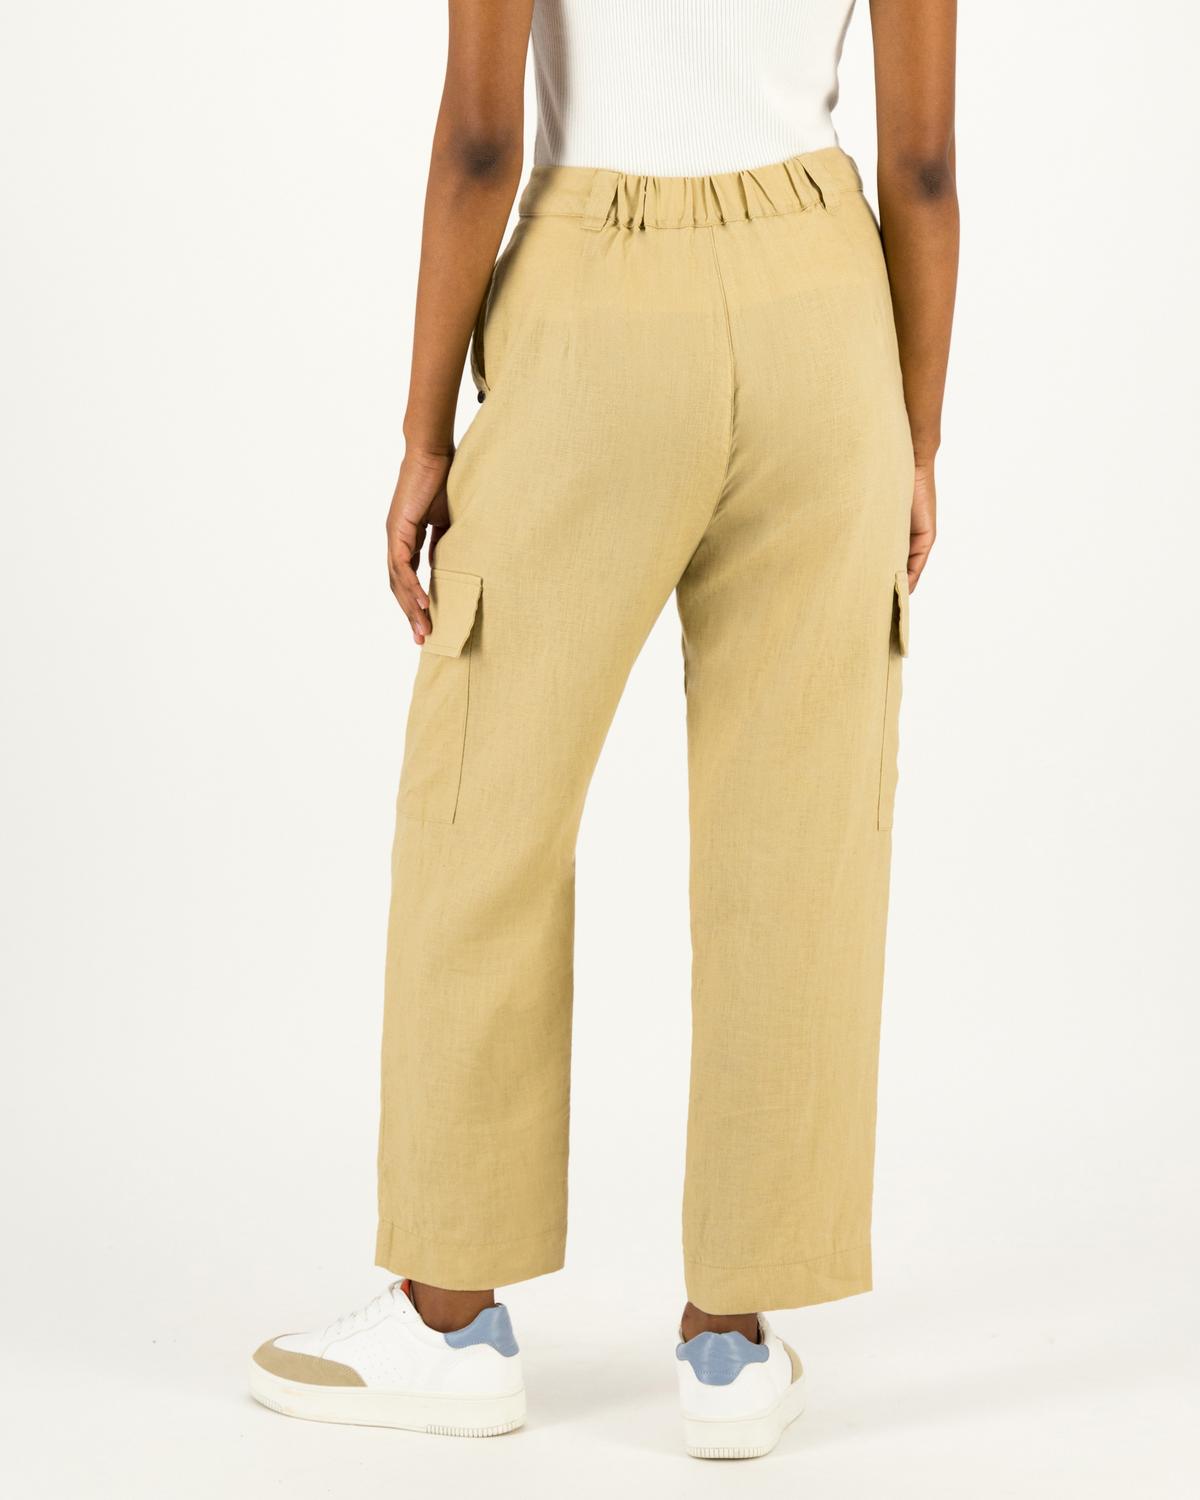 Old Khaki Women’s Audrey Soft Utility Pants